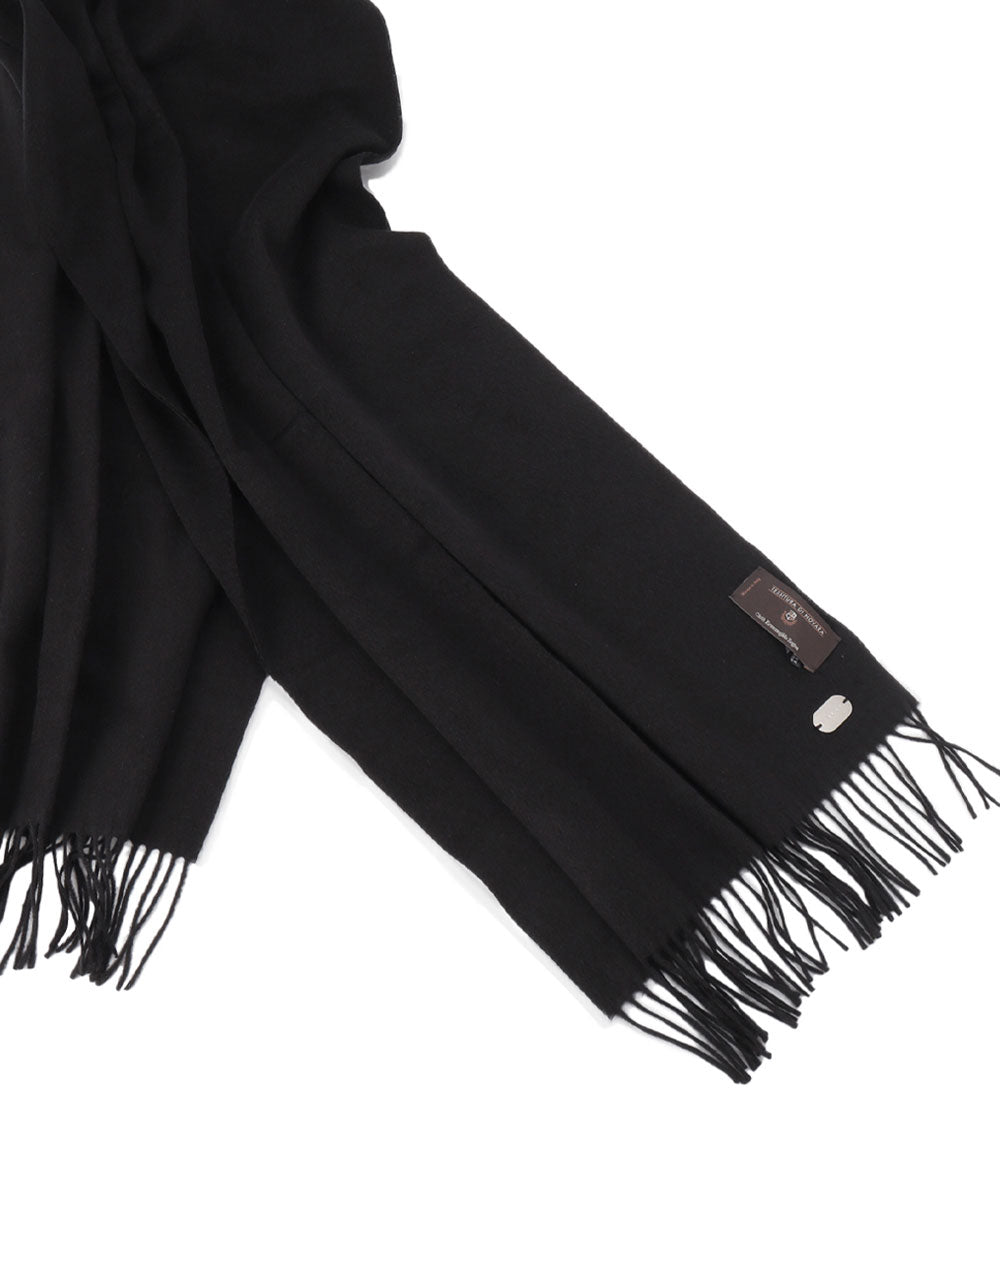 Citterio Circles Black/Camel 100% Brushed Silk Scarf - Emporio